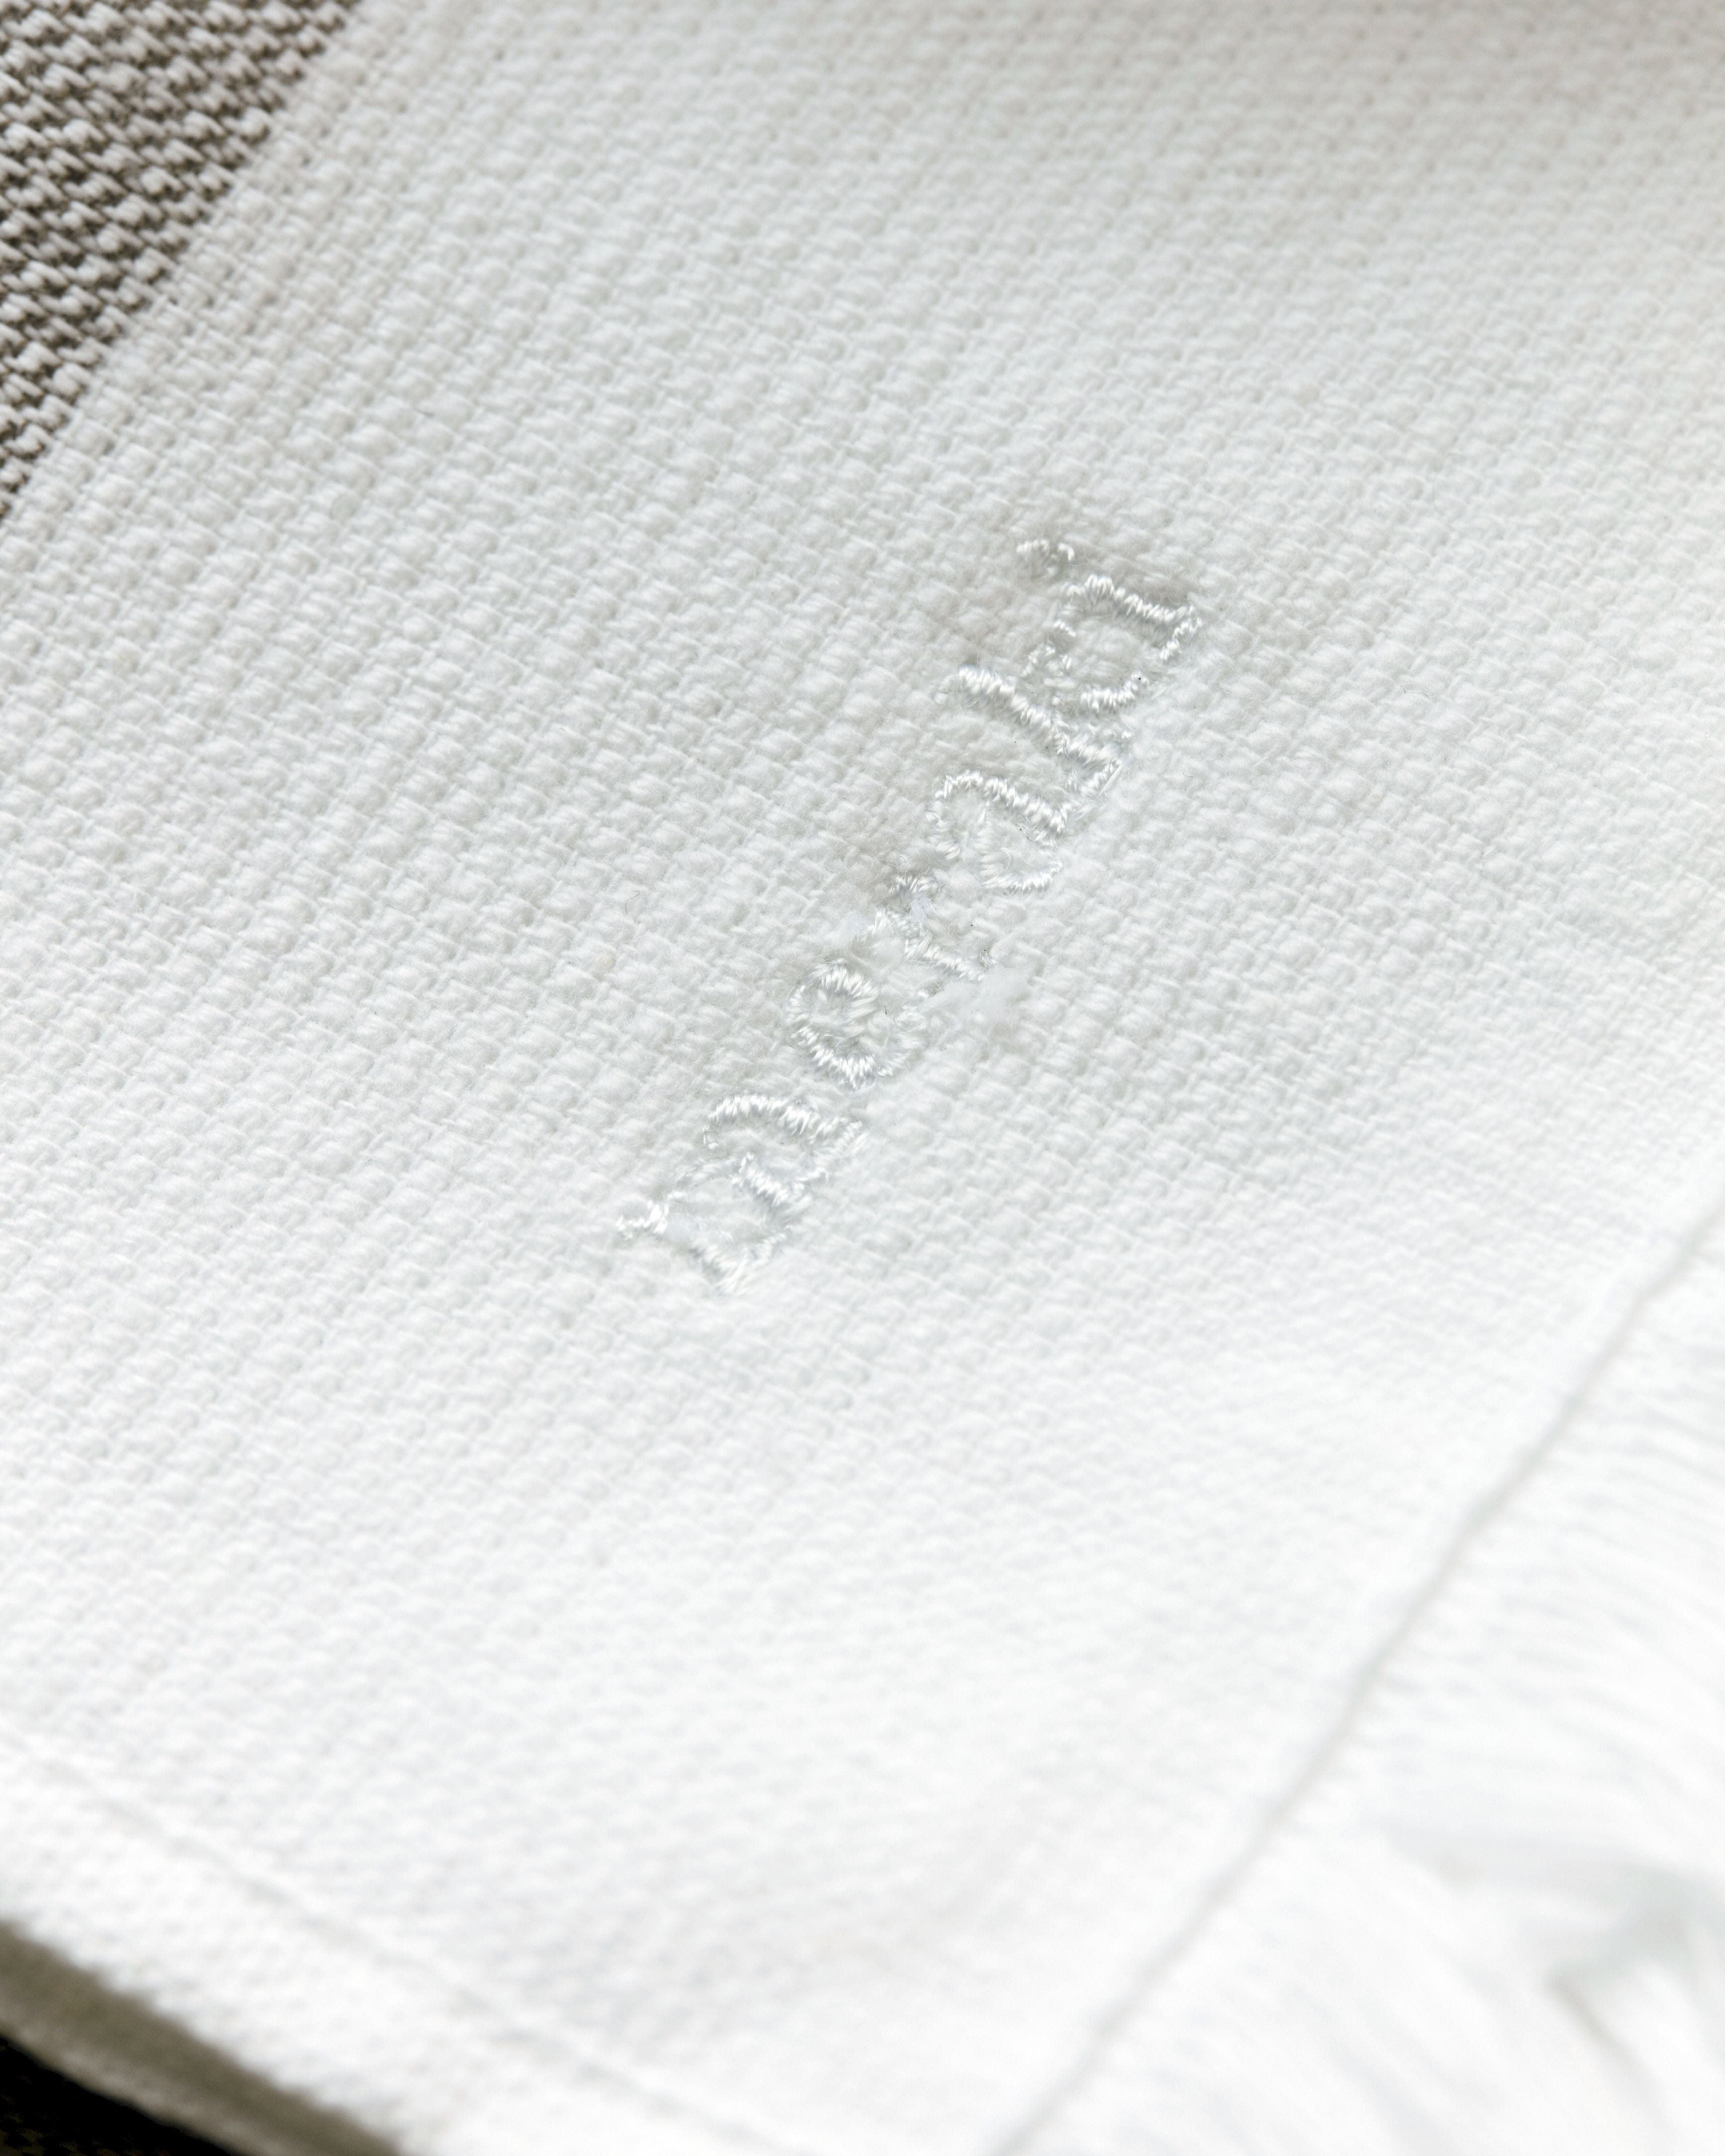 Ensemble de serviettes Meraki Barbarum de 20x100 cm, rayures blanches et brunes